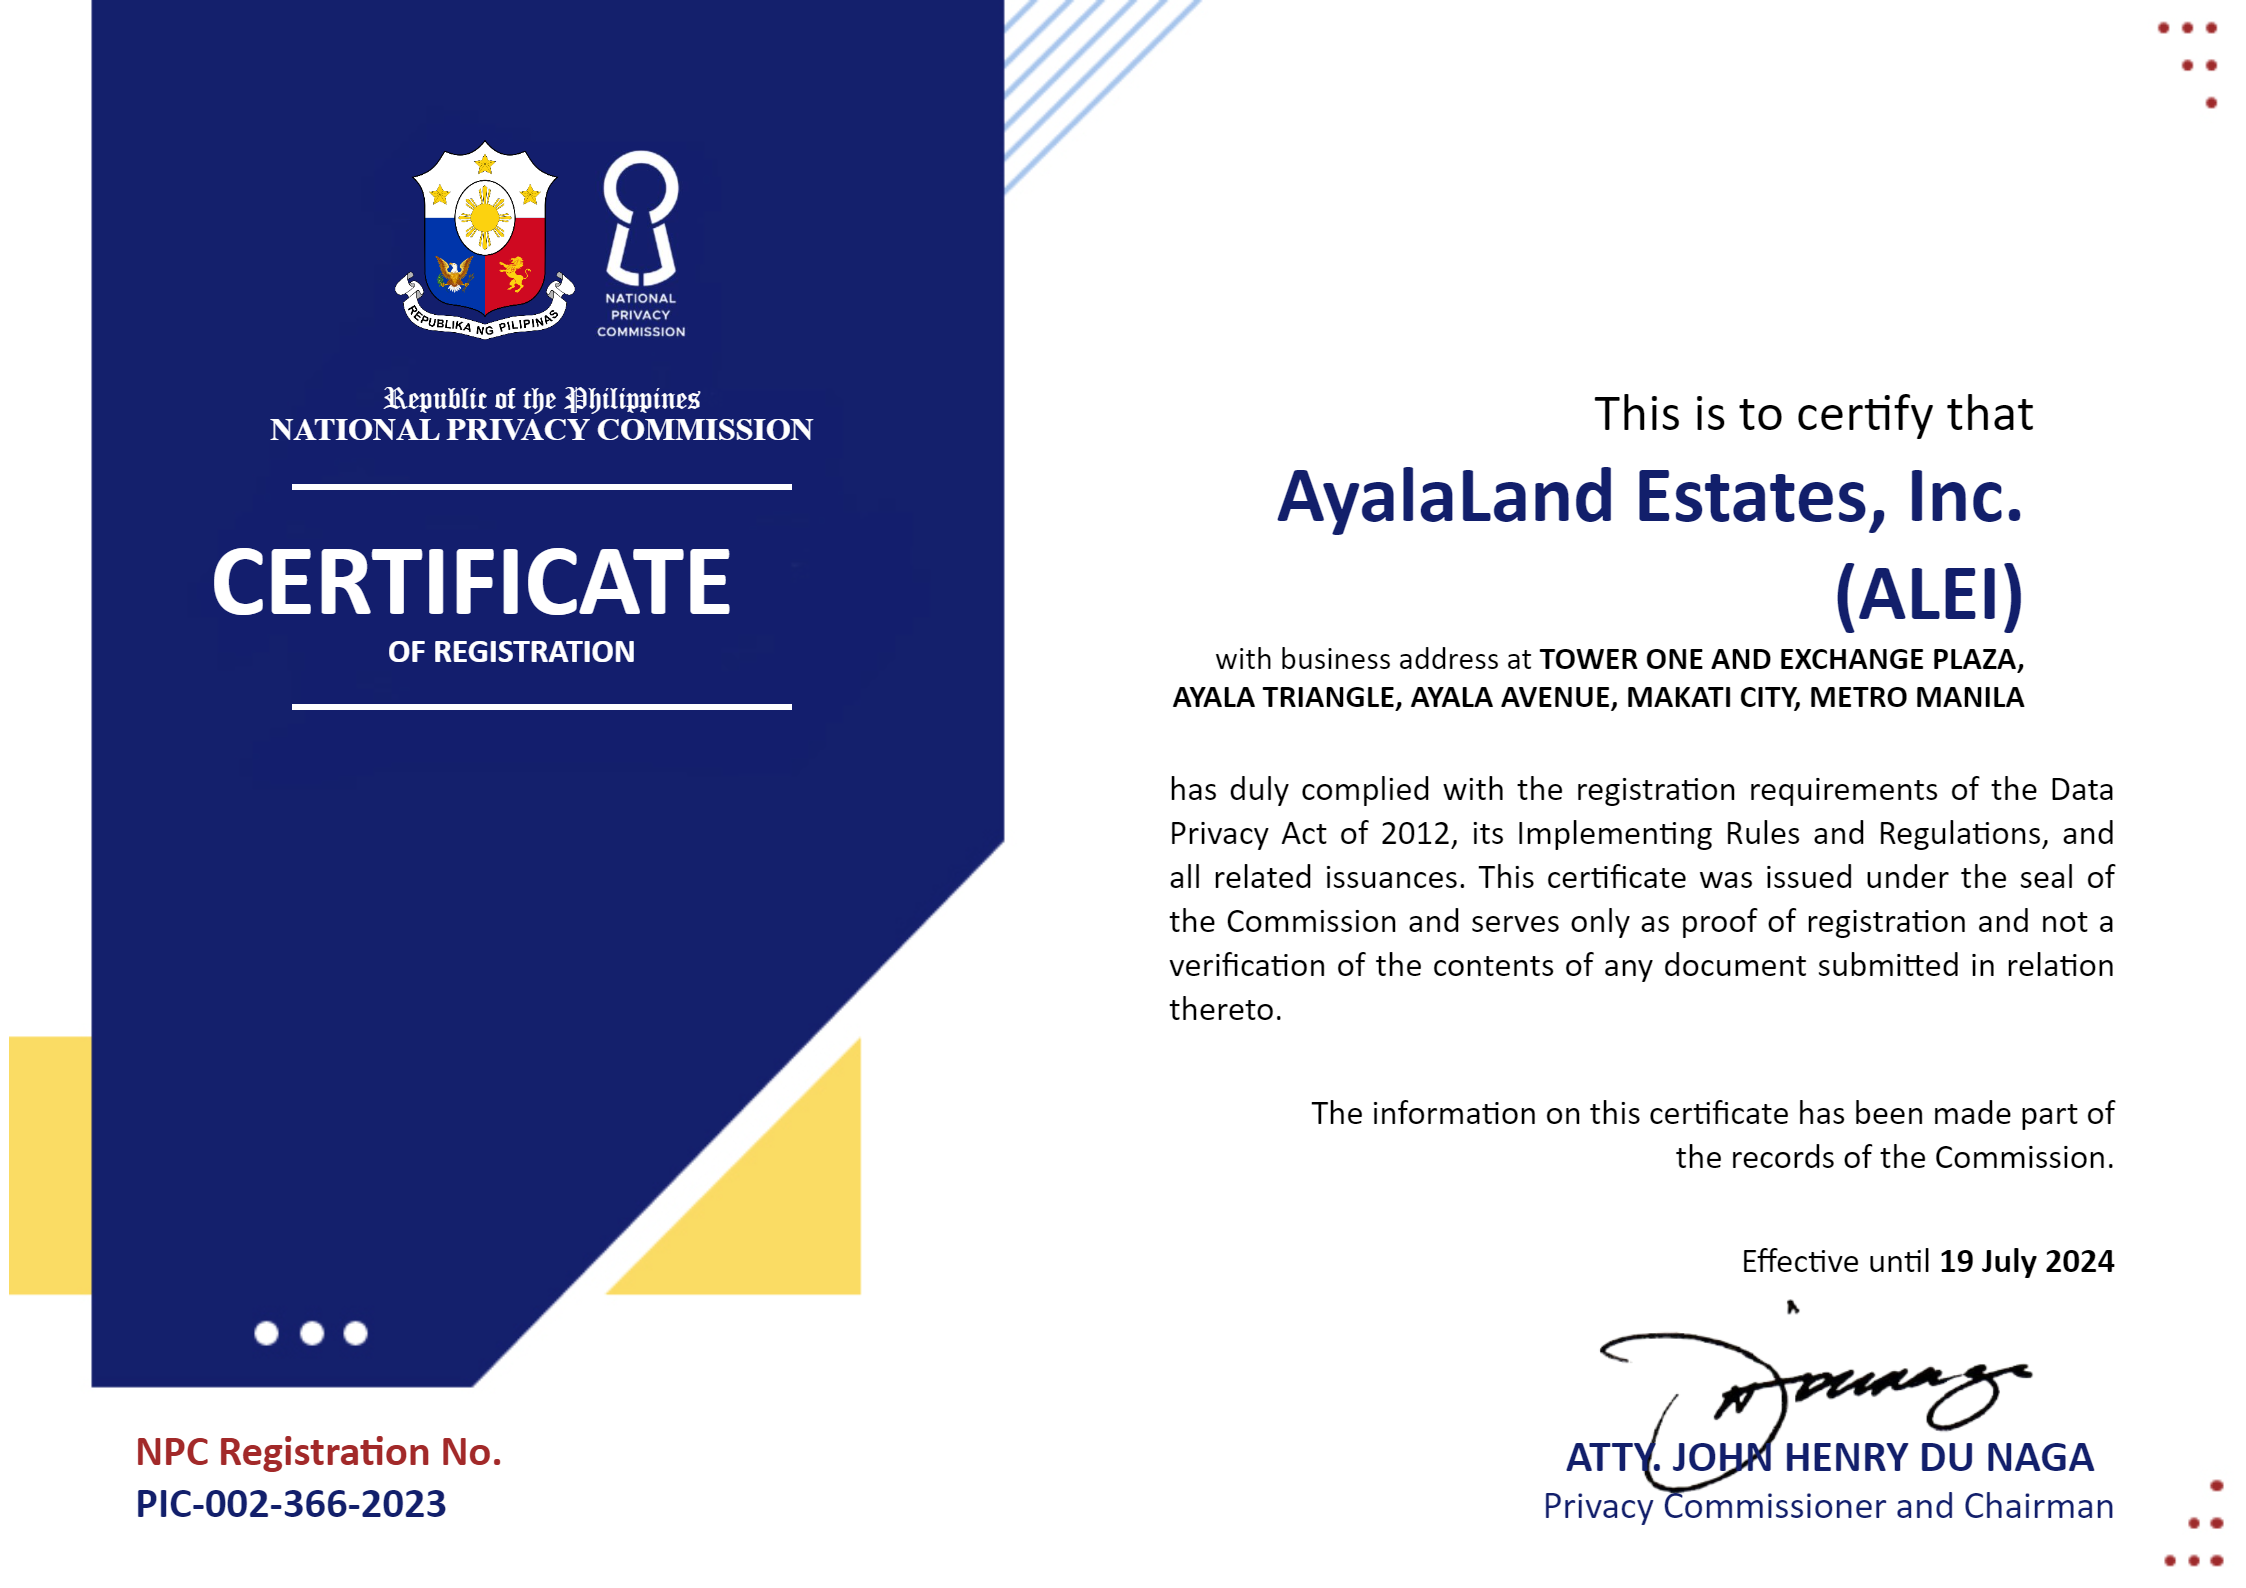 08 - Certificate of Registration - AyalaLand Estates, Inc